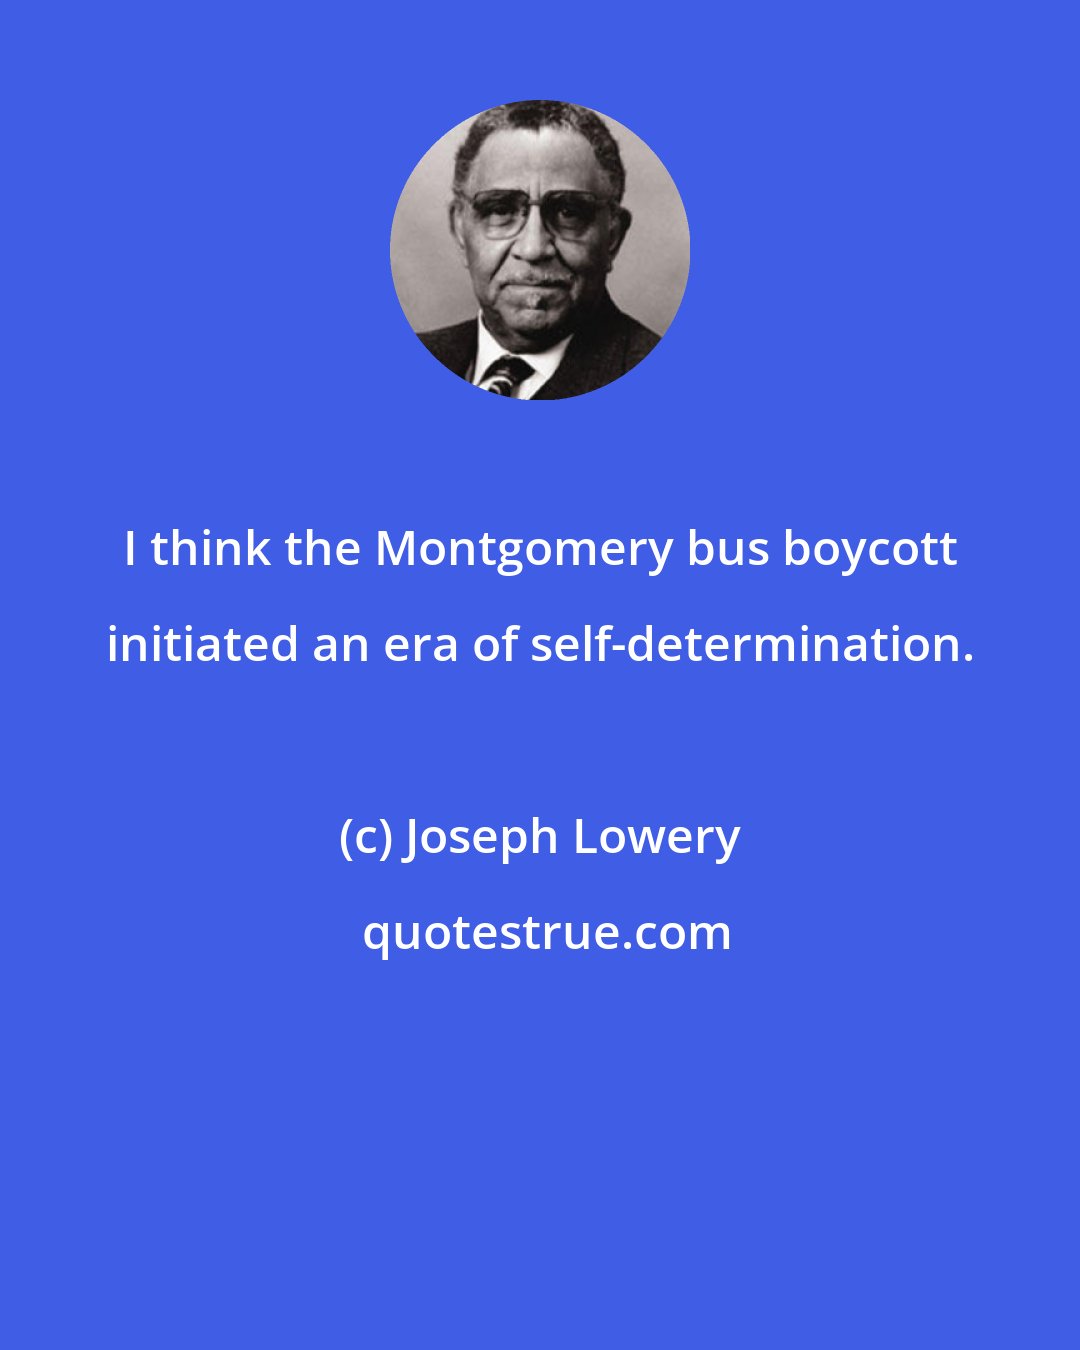 Joseph Lowery: I think the Montgomery bus boycott initiated an era of self-determination.